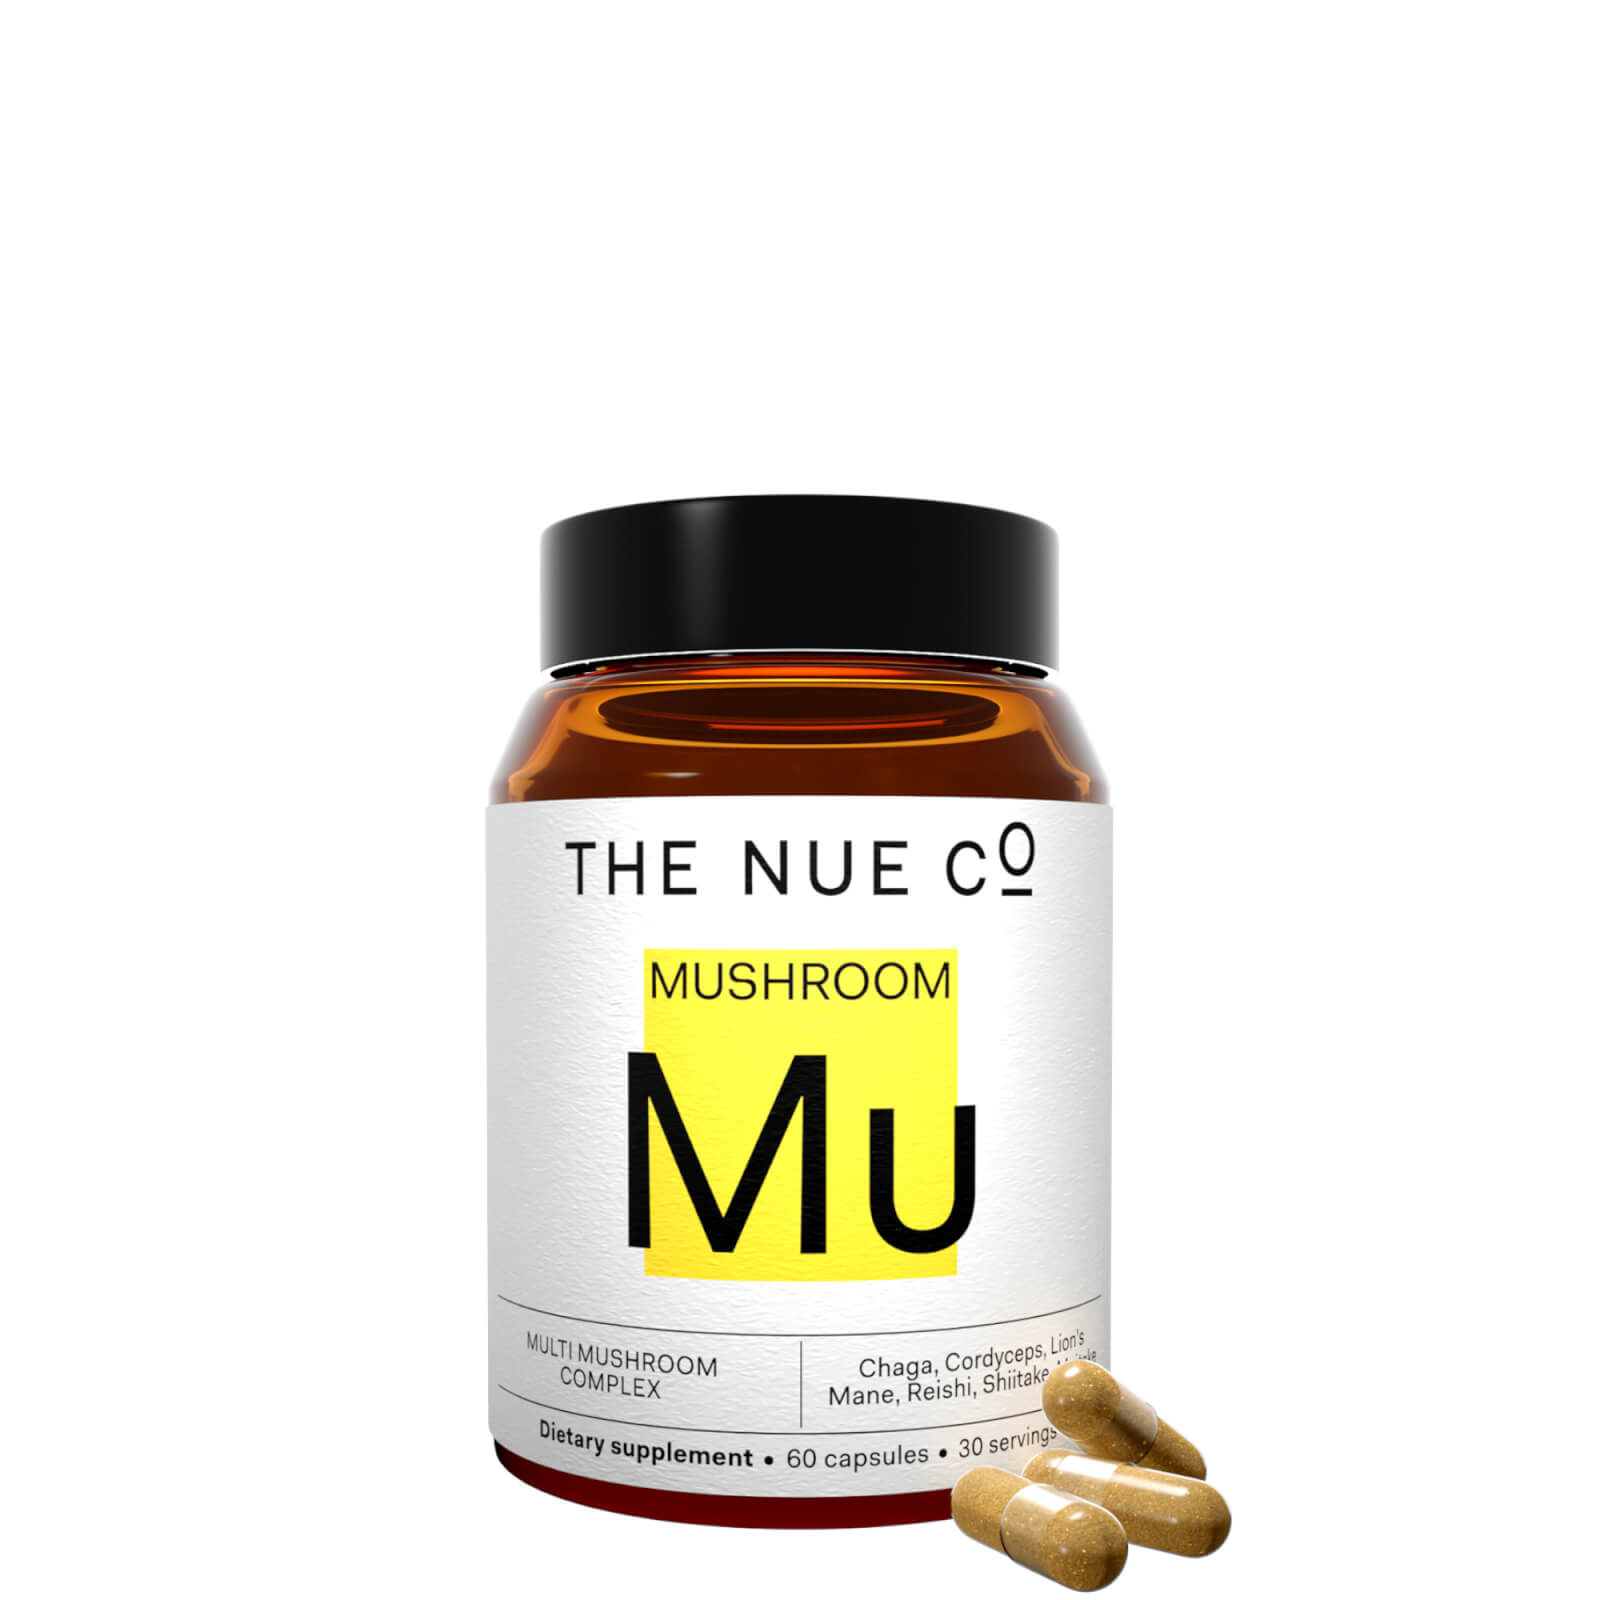 The Nue Co. Multi Mushroom Complex Supplement To Increase Focus (60 Capsules) In White